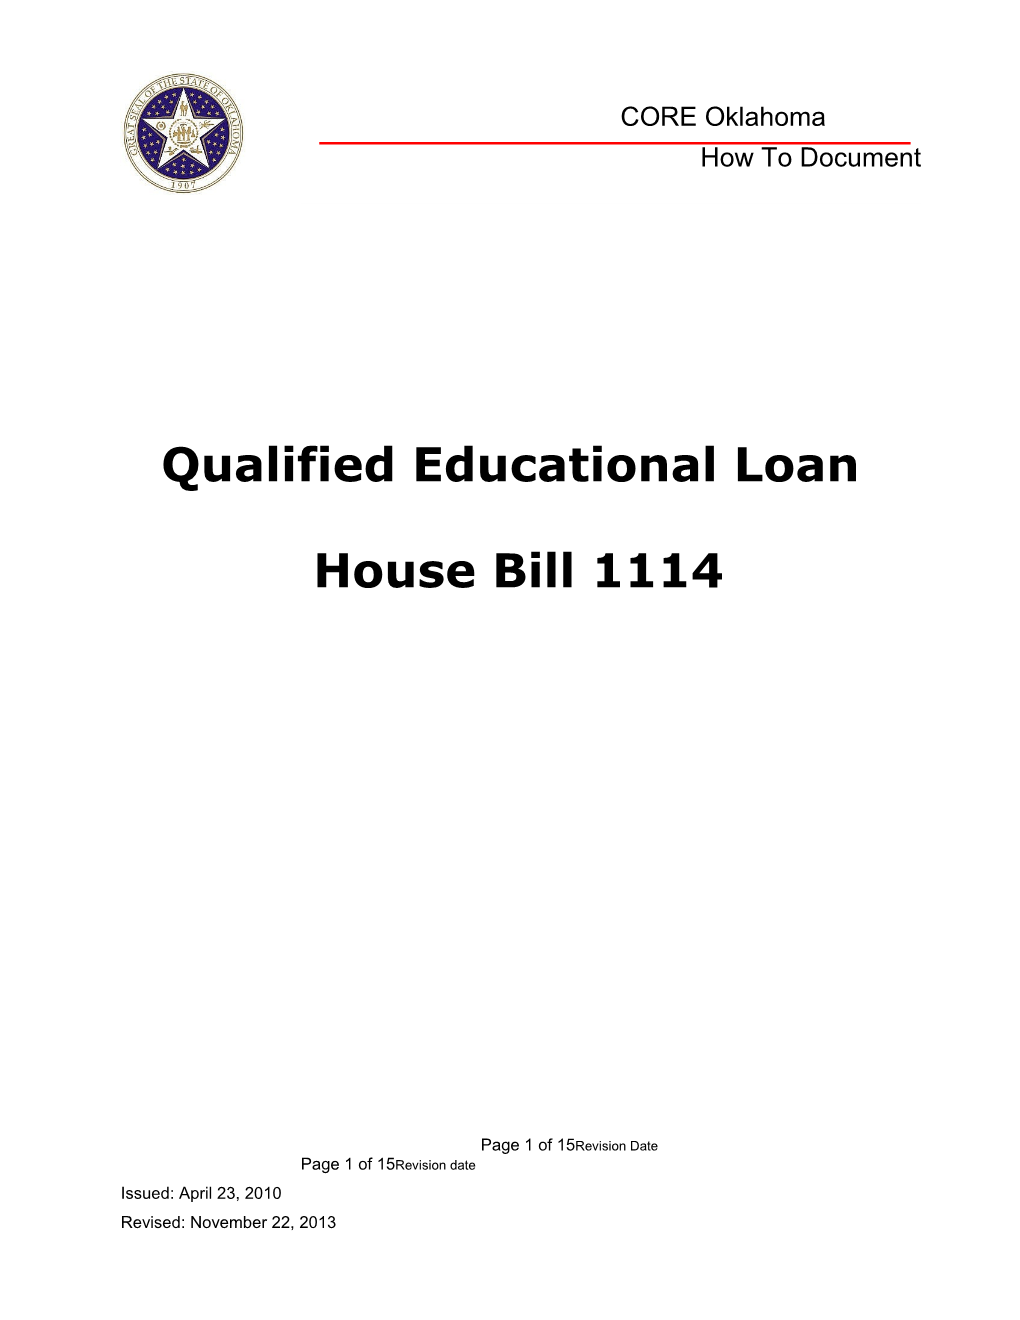 CORE How To: Qualified Educational Loan Reimbursement